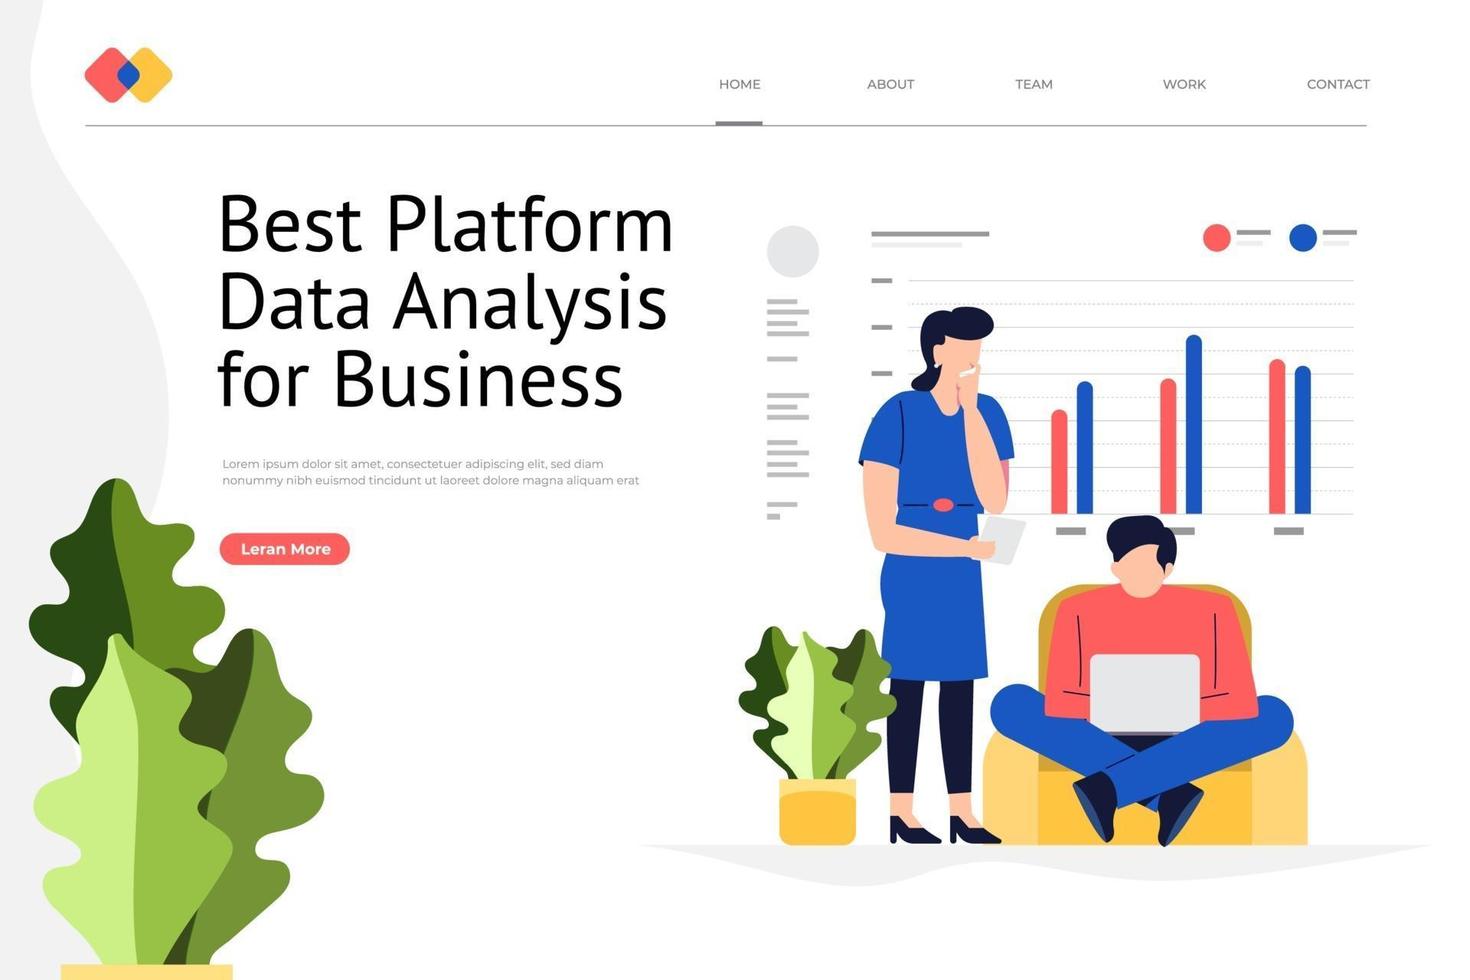 Data Analysis Website vector